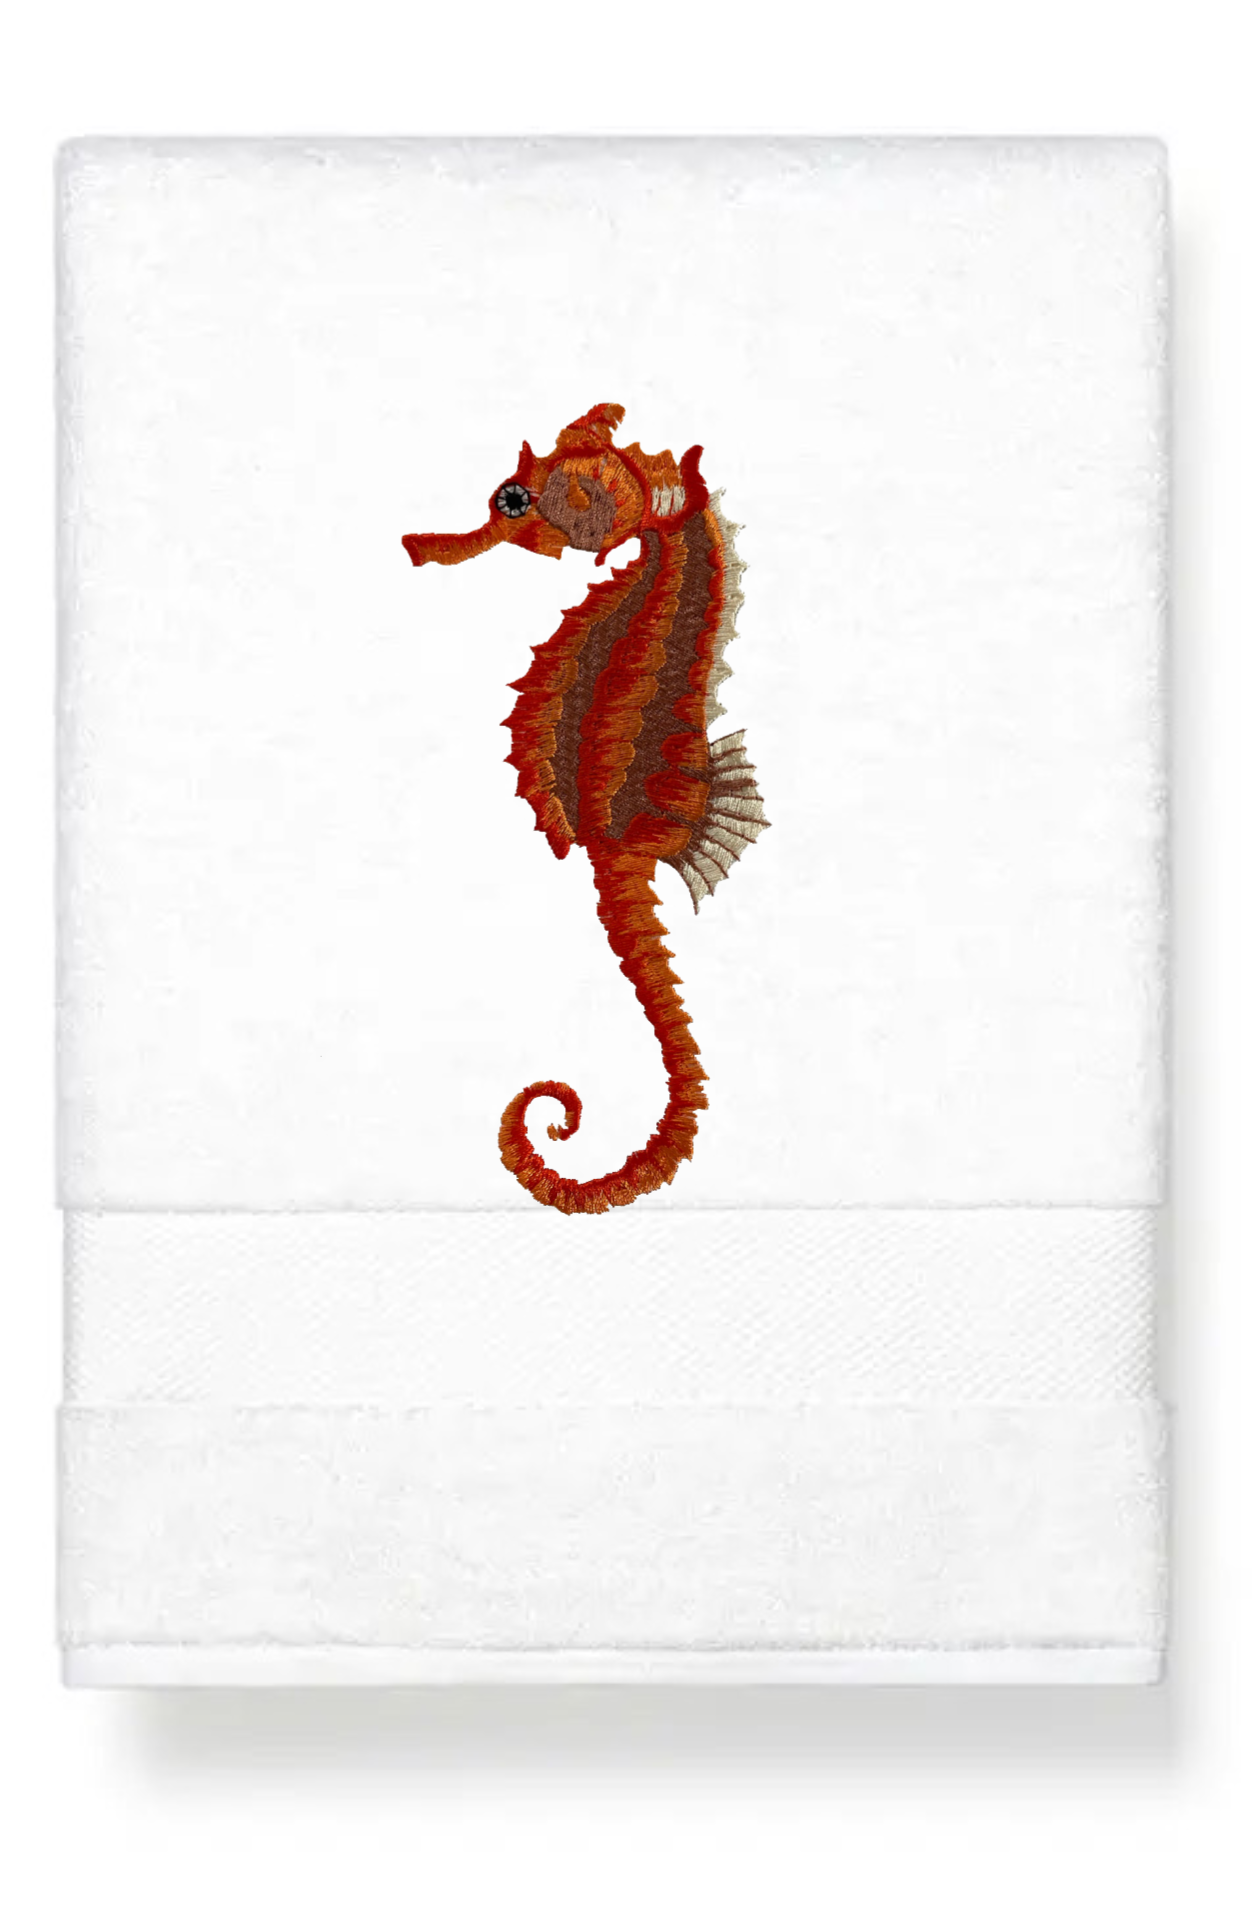 Seahorse Embroidered Bath Hand Towel. Beautifully Detailed Vibrant Orange Shades